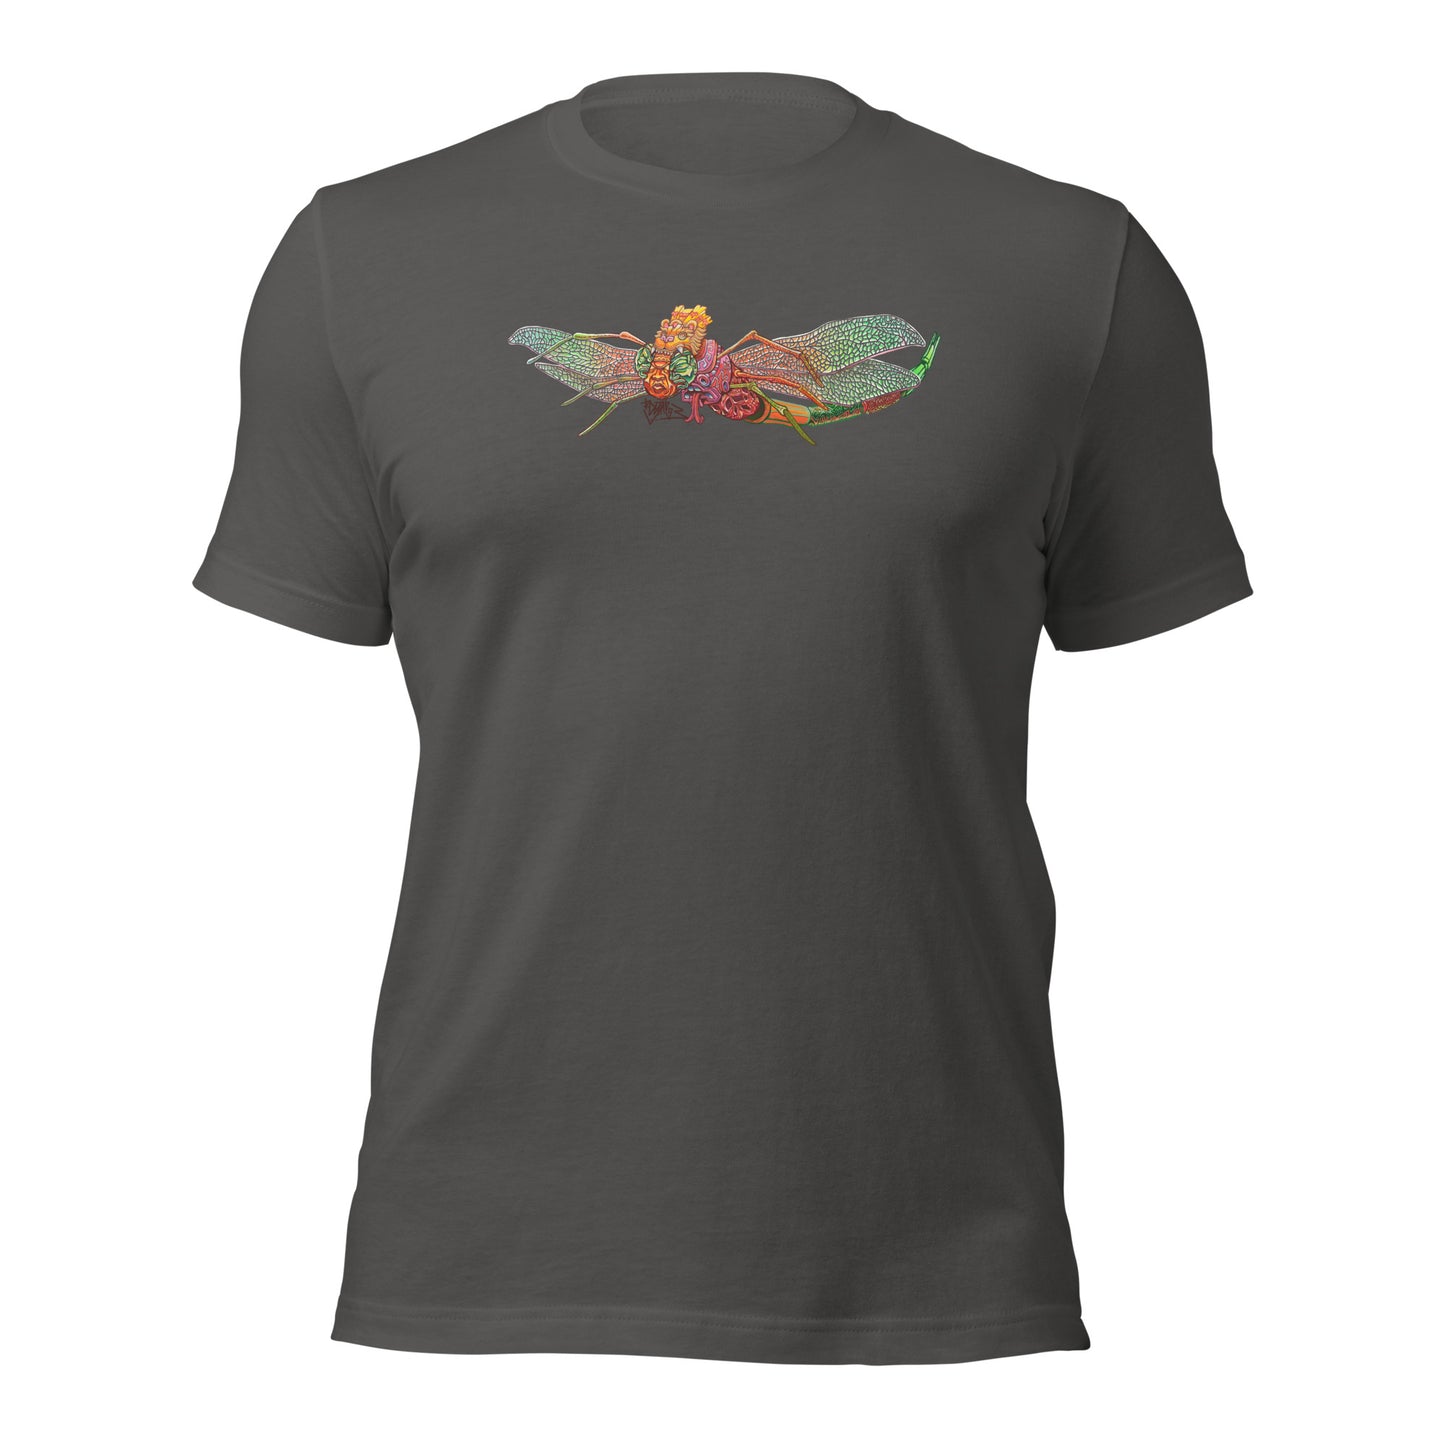 Unisex t-shirt "Totemfly" 3GSS